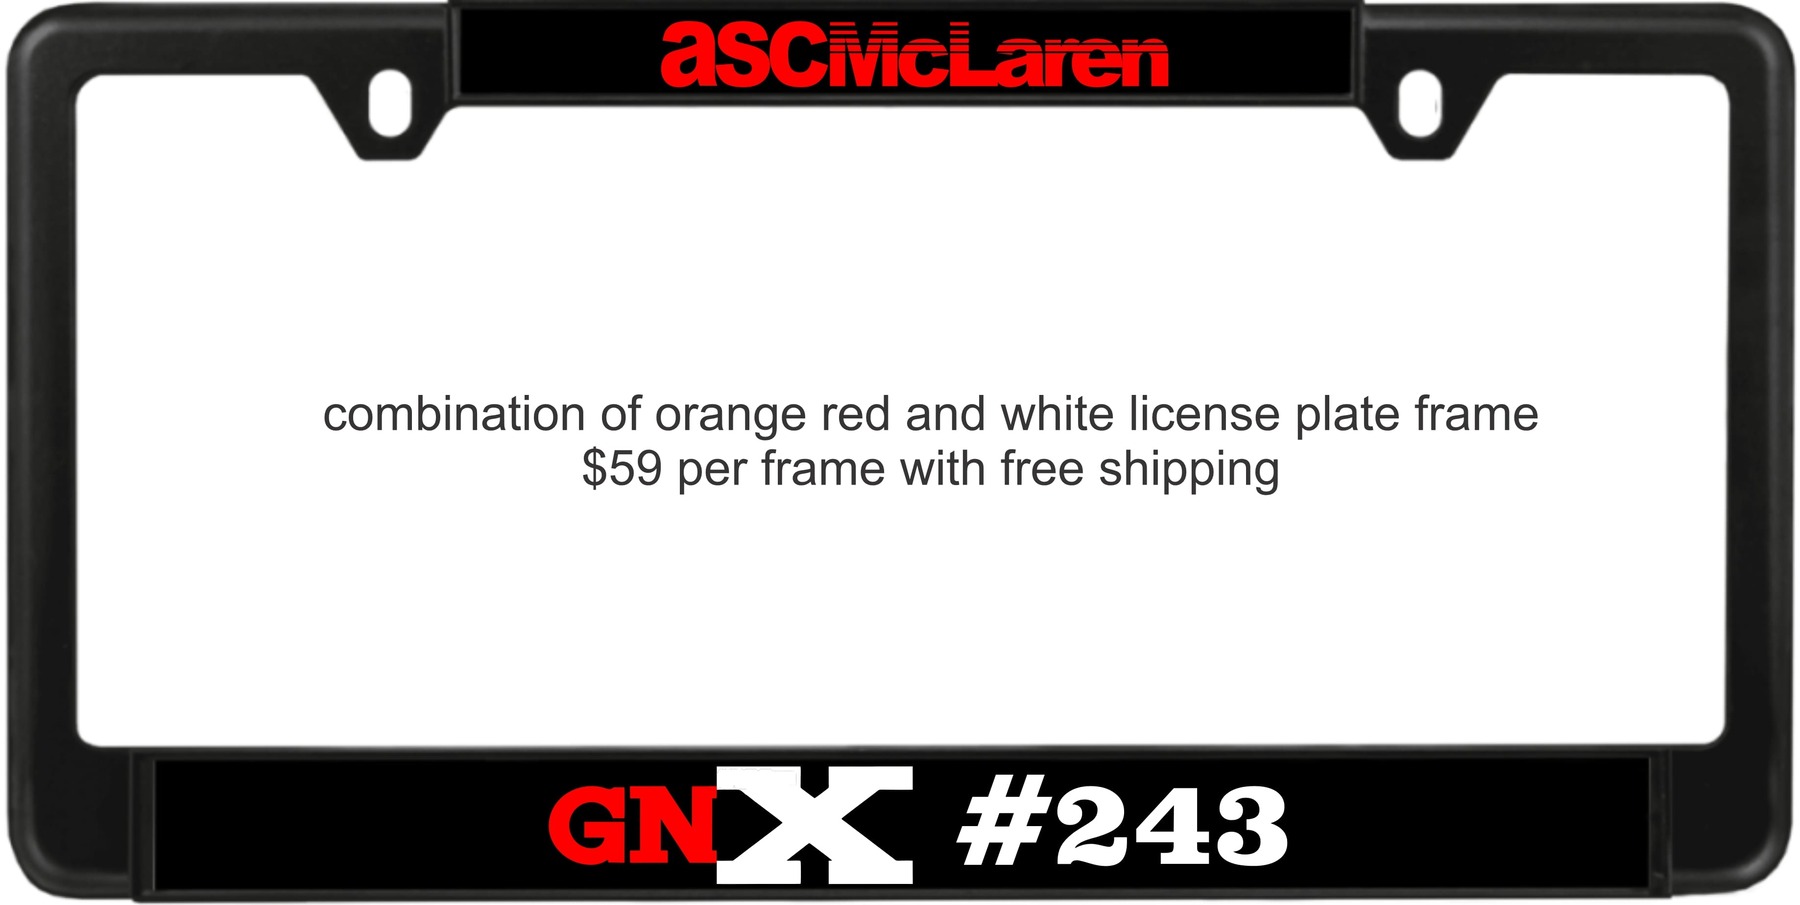 McLarren License Plate frame